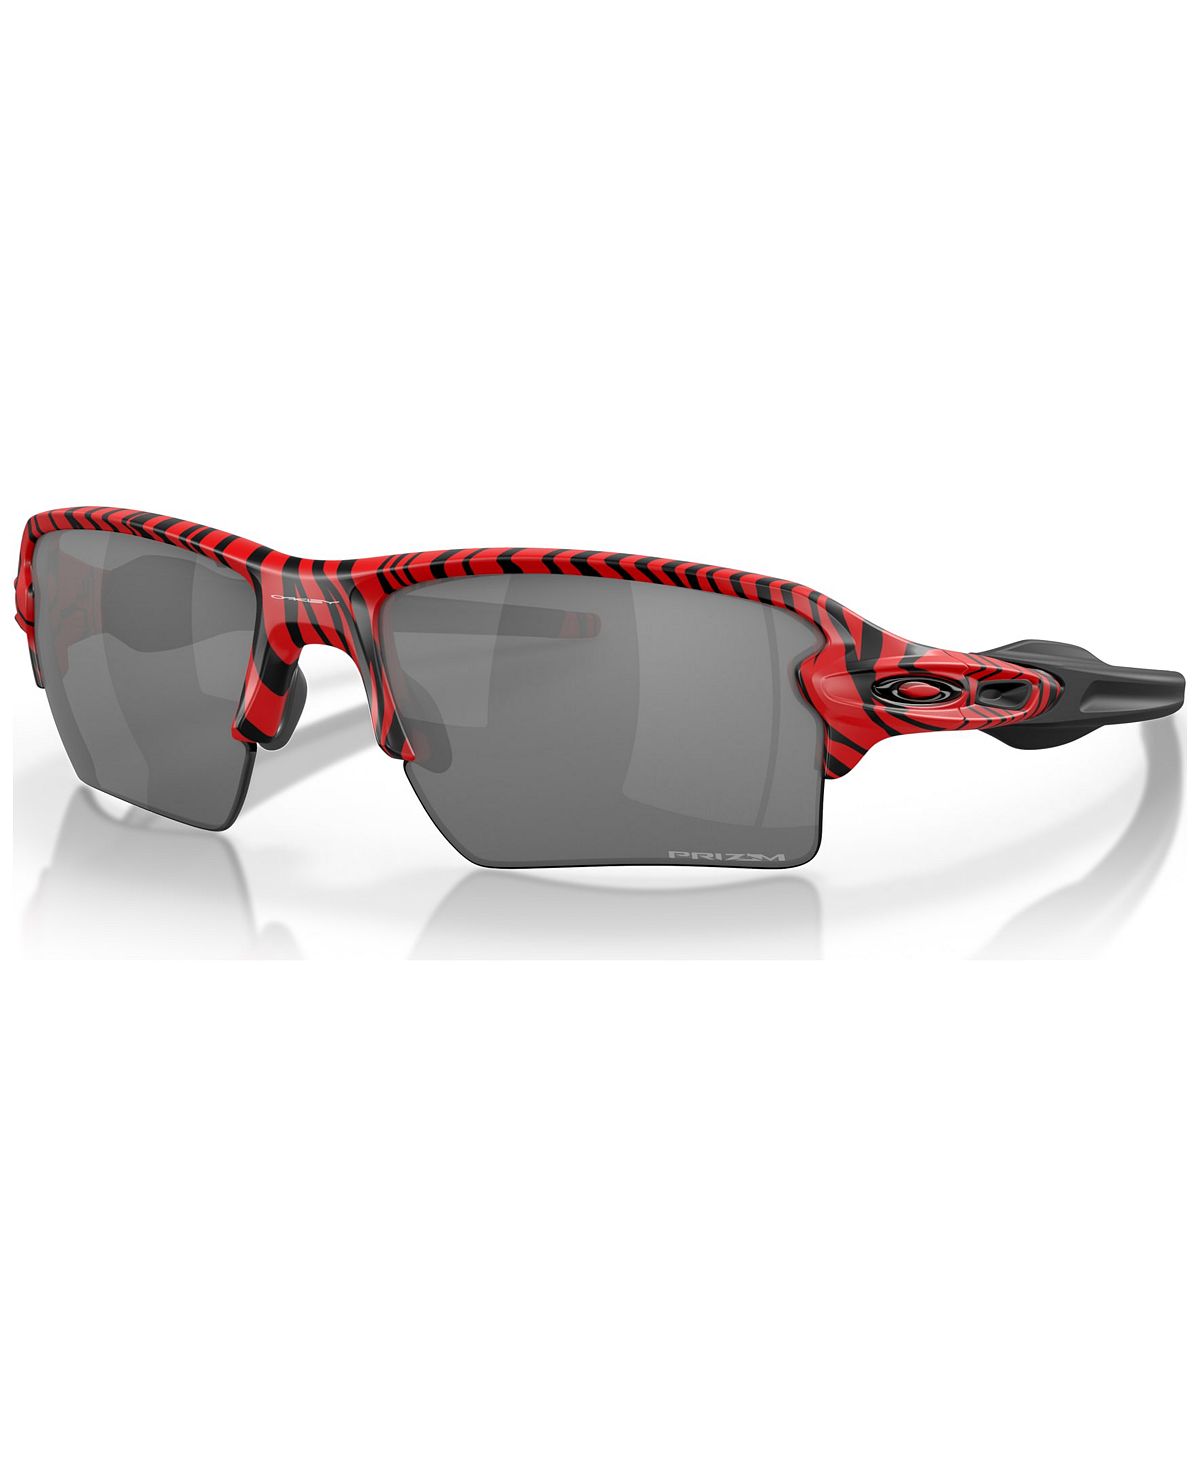 Мужские солнцезащитные очки Flak 2.0 XL Red Tiger Oakley